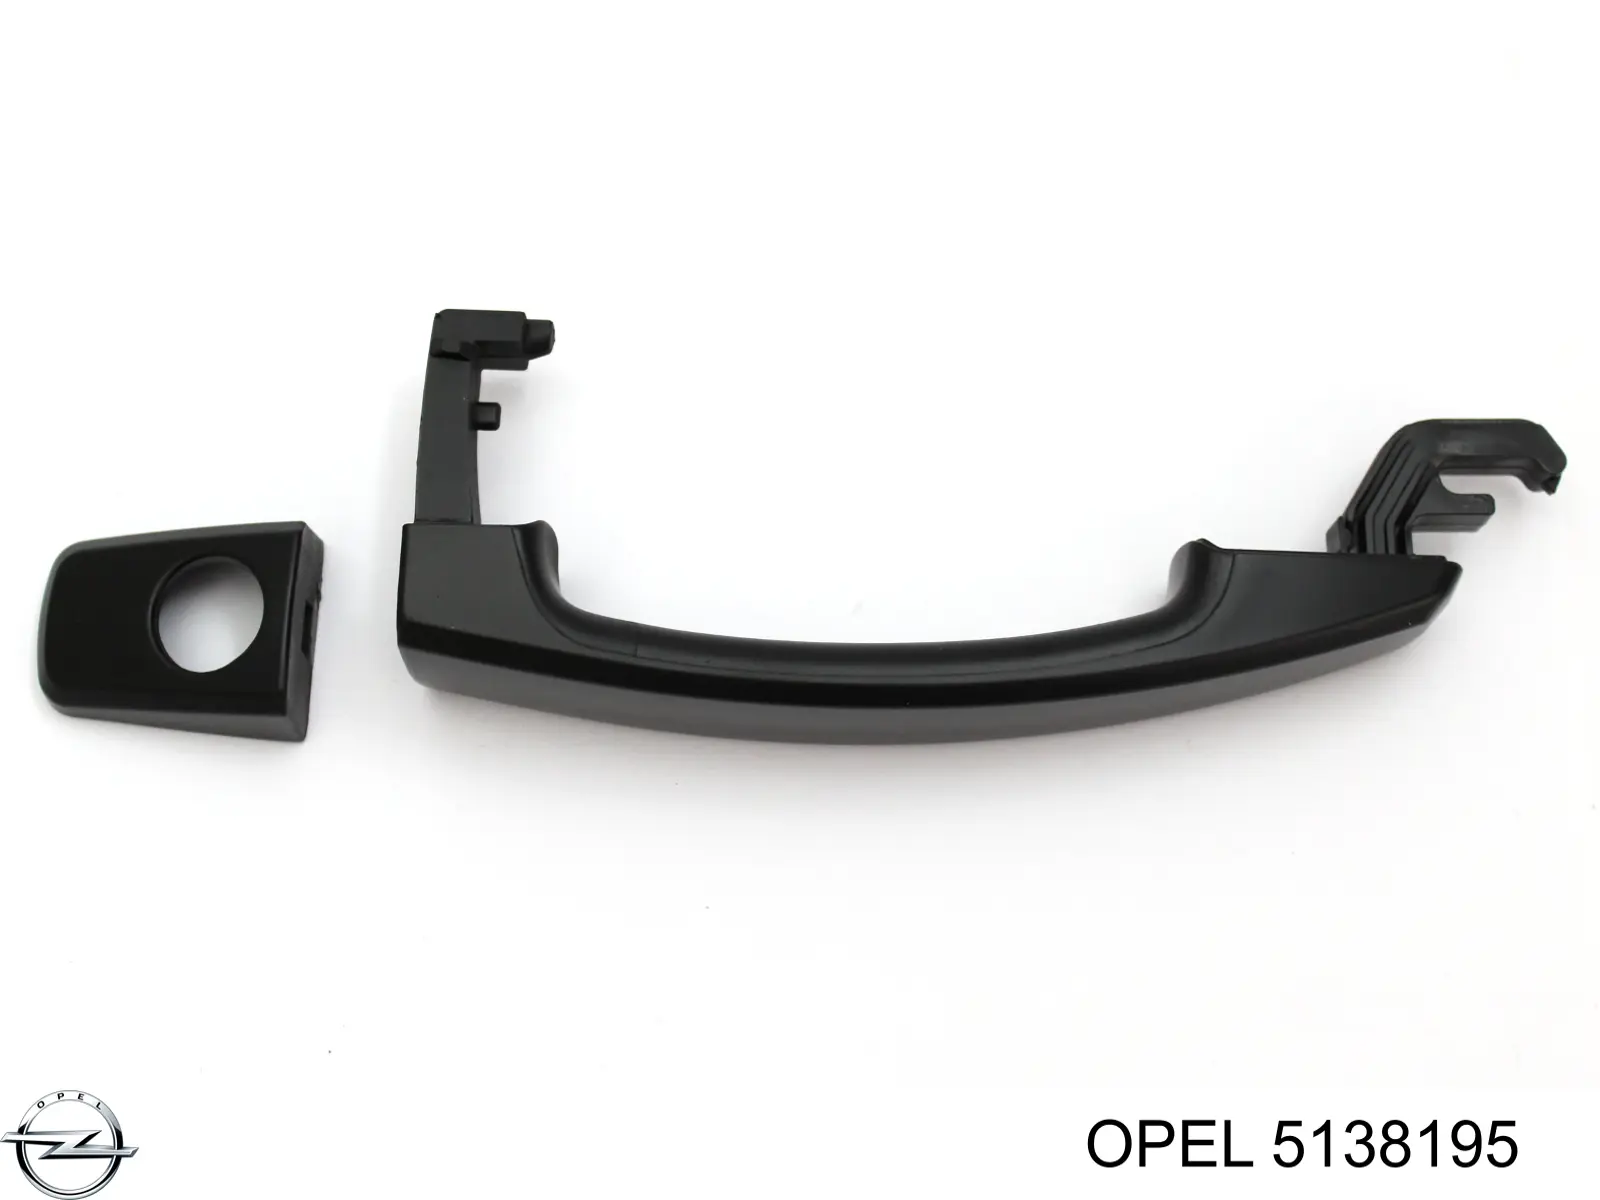 5138195 Opel tirador de puerta exterior delantero